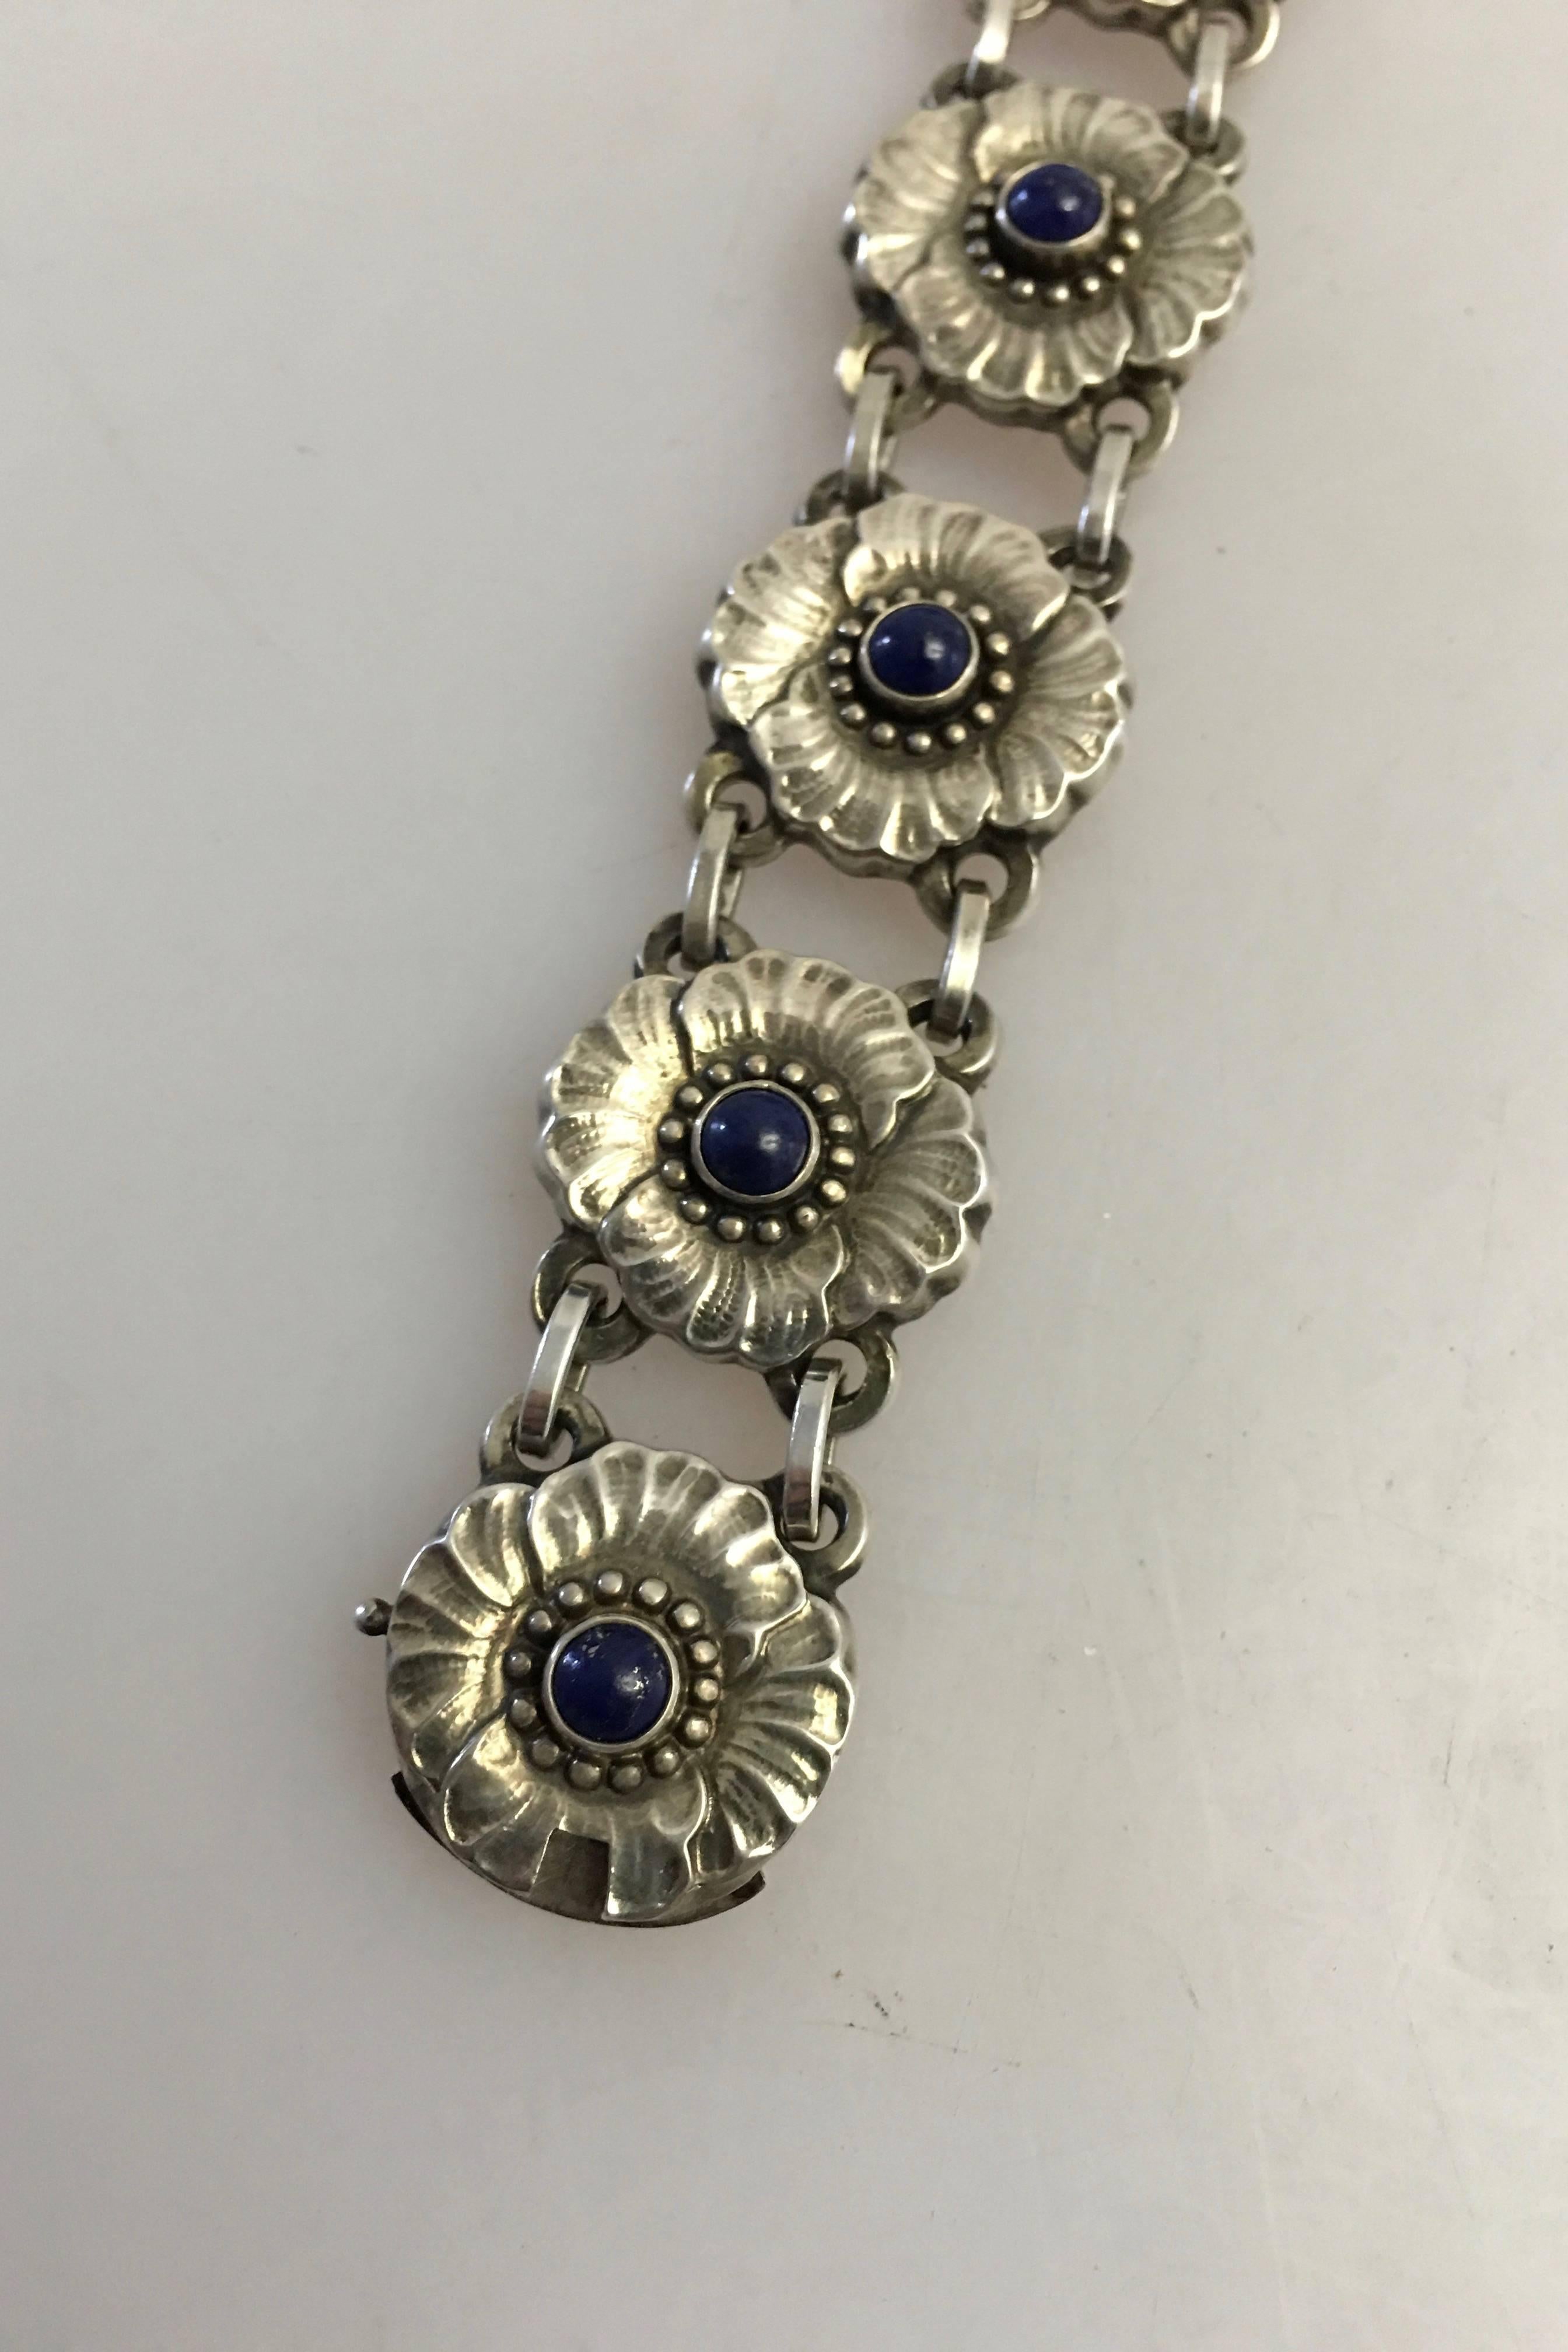 Danish Georg Jensen Sterling Silver Bracelet #36 with Lapis Lazuli